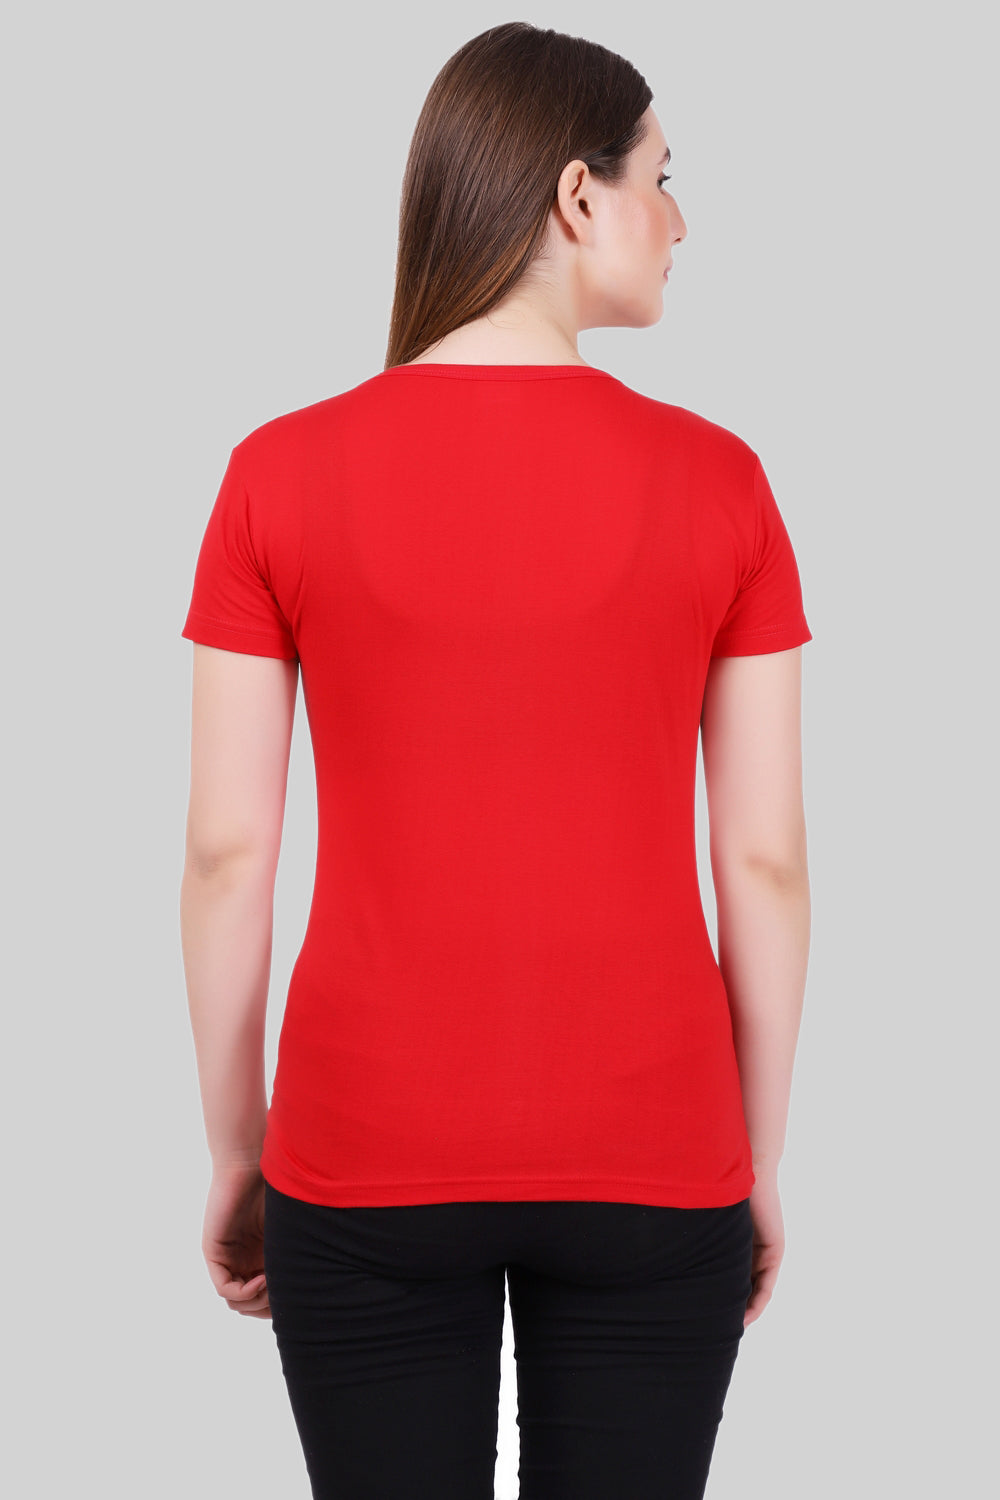 Women's Cotton Plain V Neck Half Sleeve Red Color T-Shirt